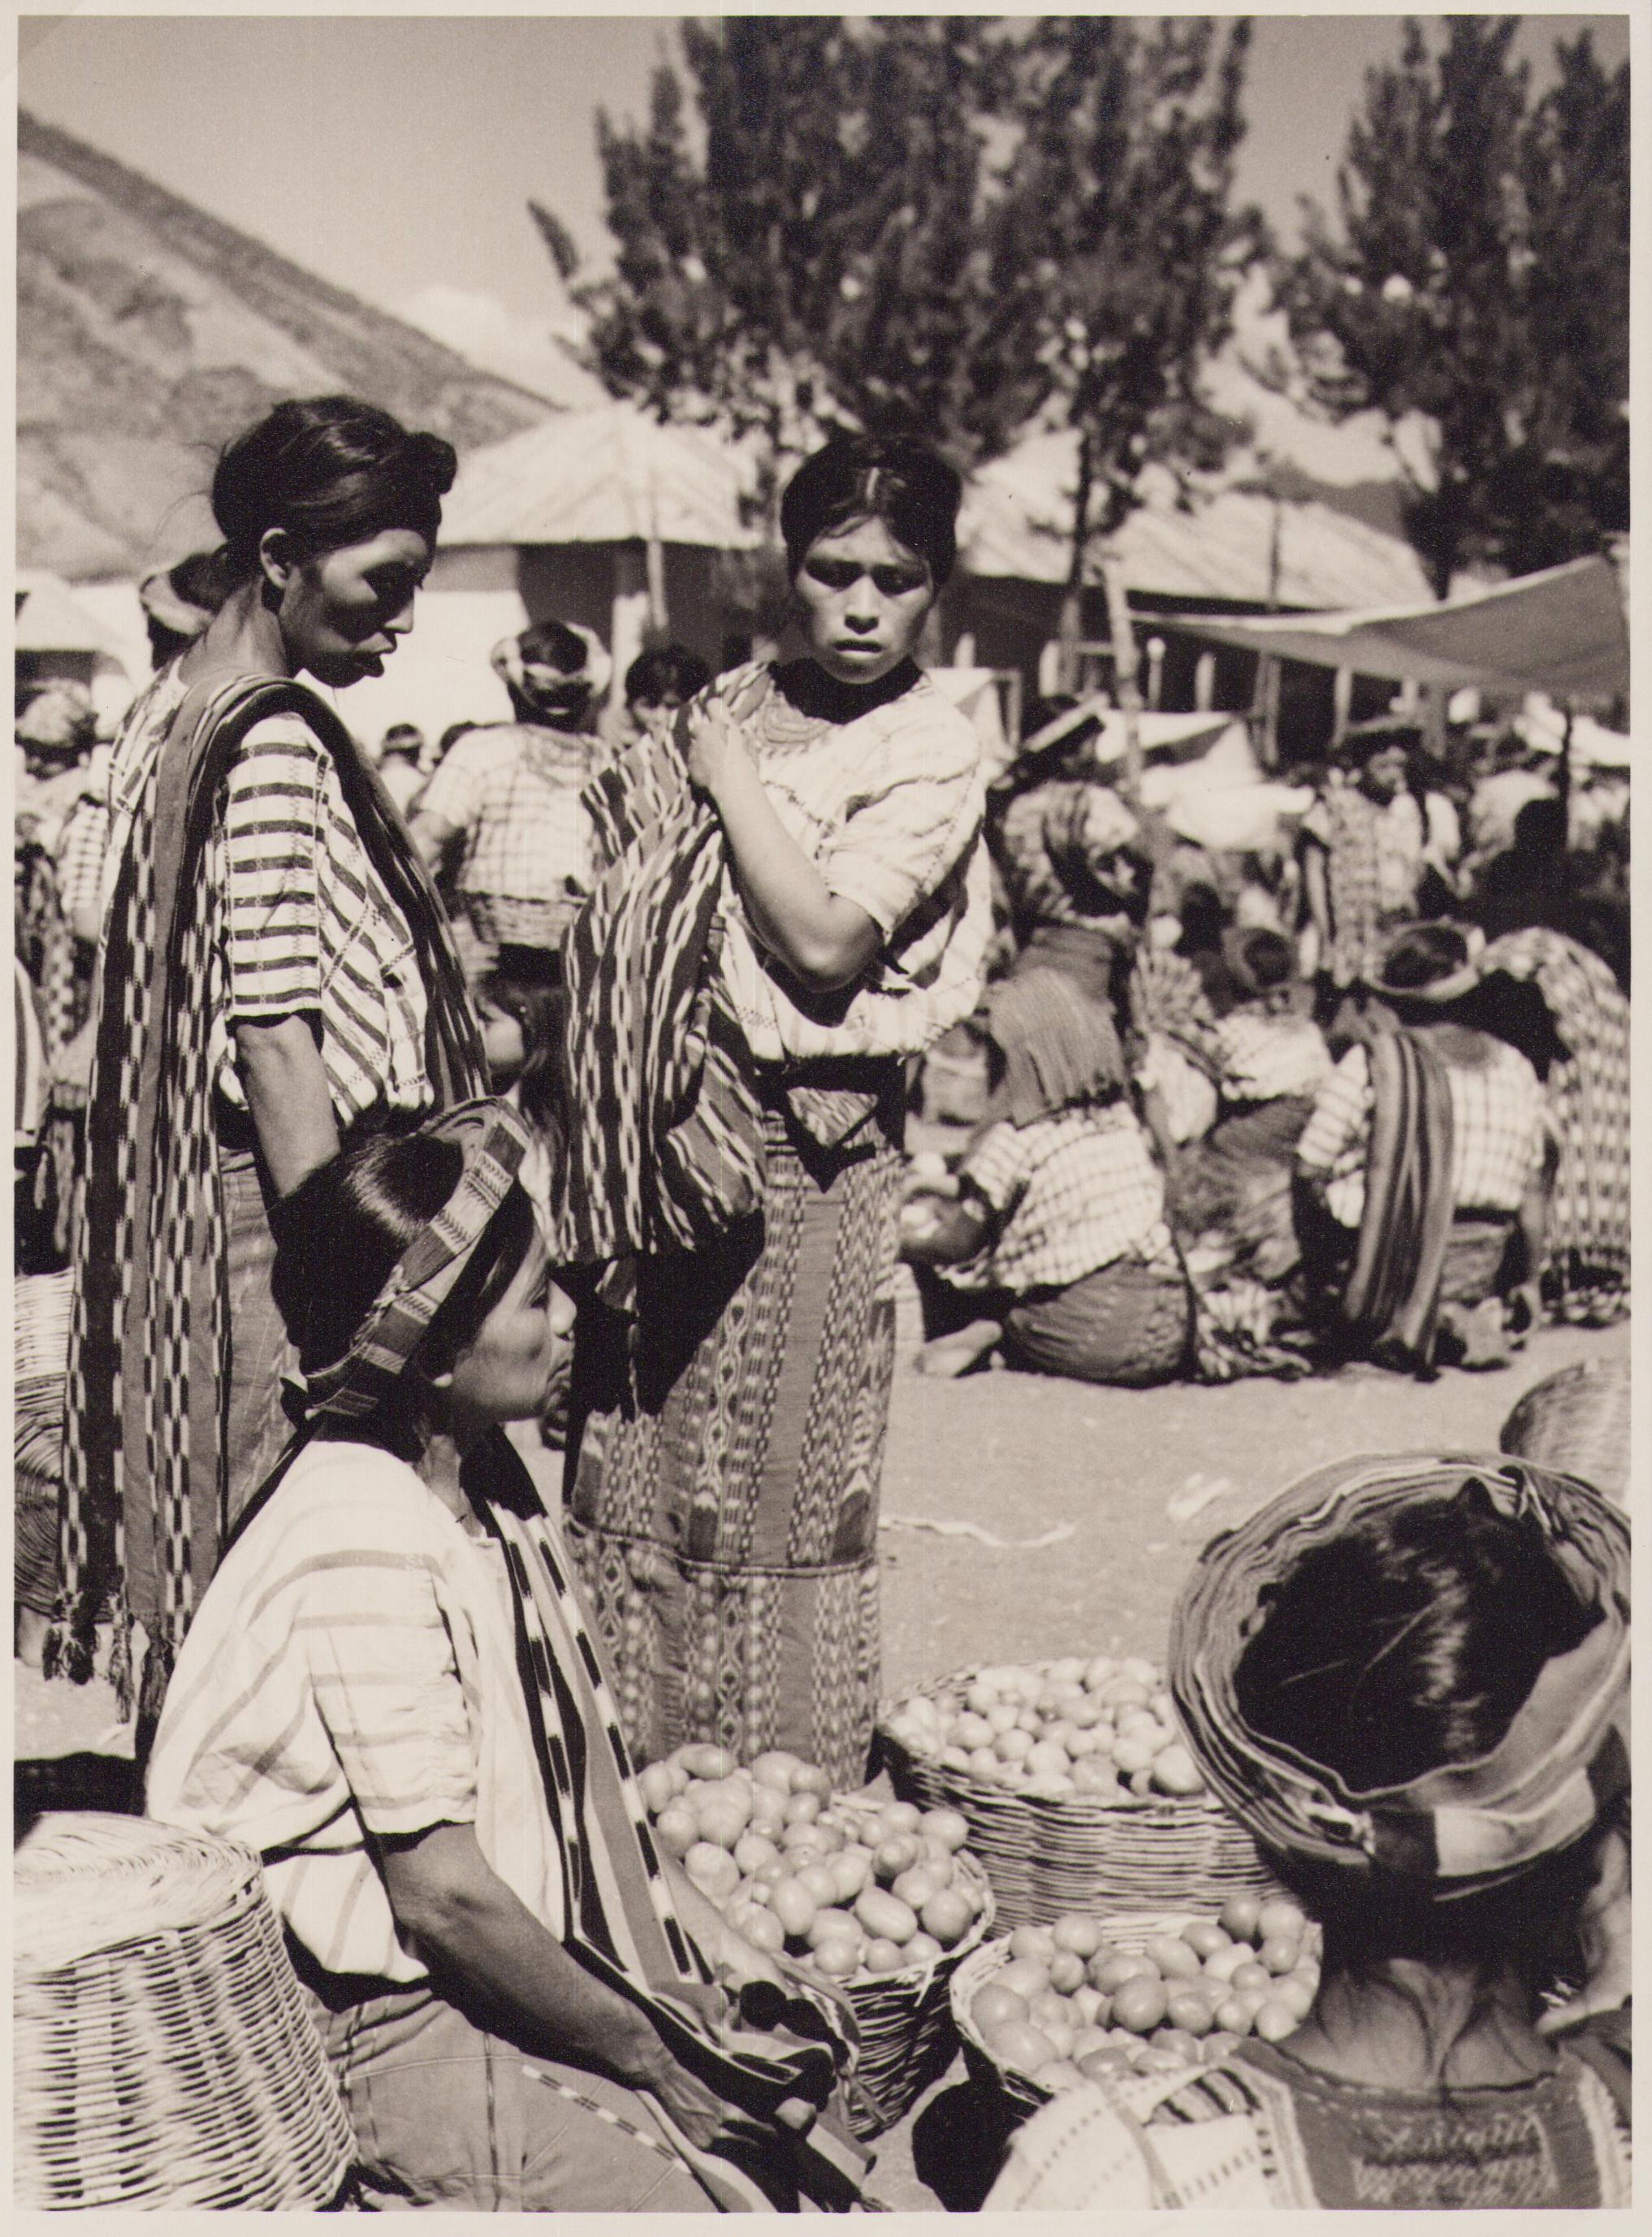 Hanna Seidel Portrait Photograph - Guatemala, Market, People, Black and White Photography, 1960s, 23, 1 x 17, 1 cm